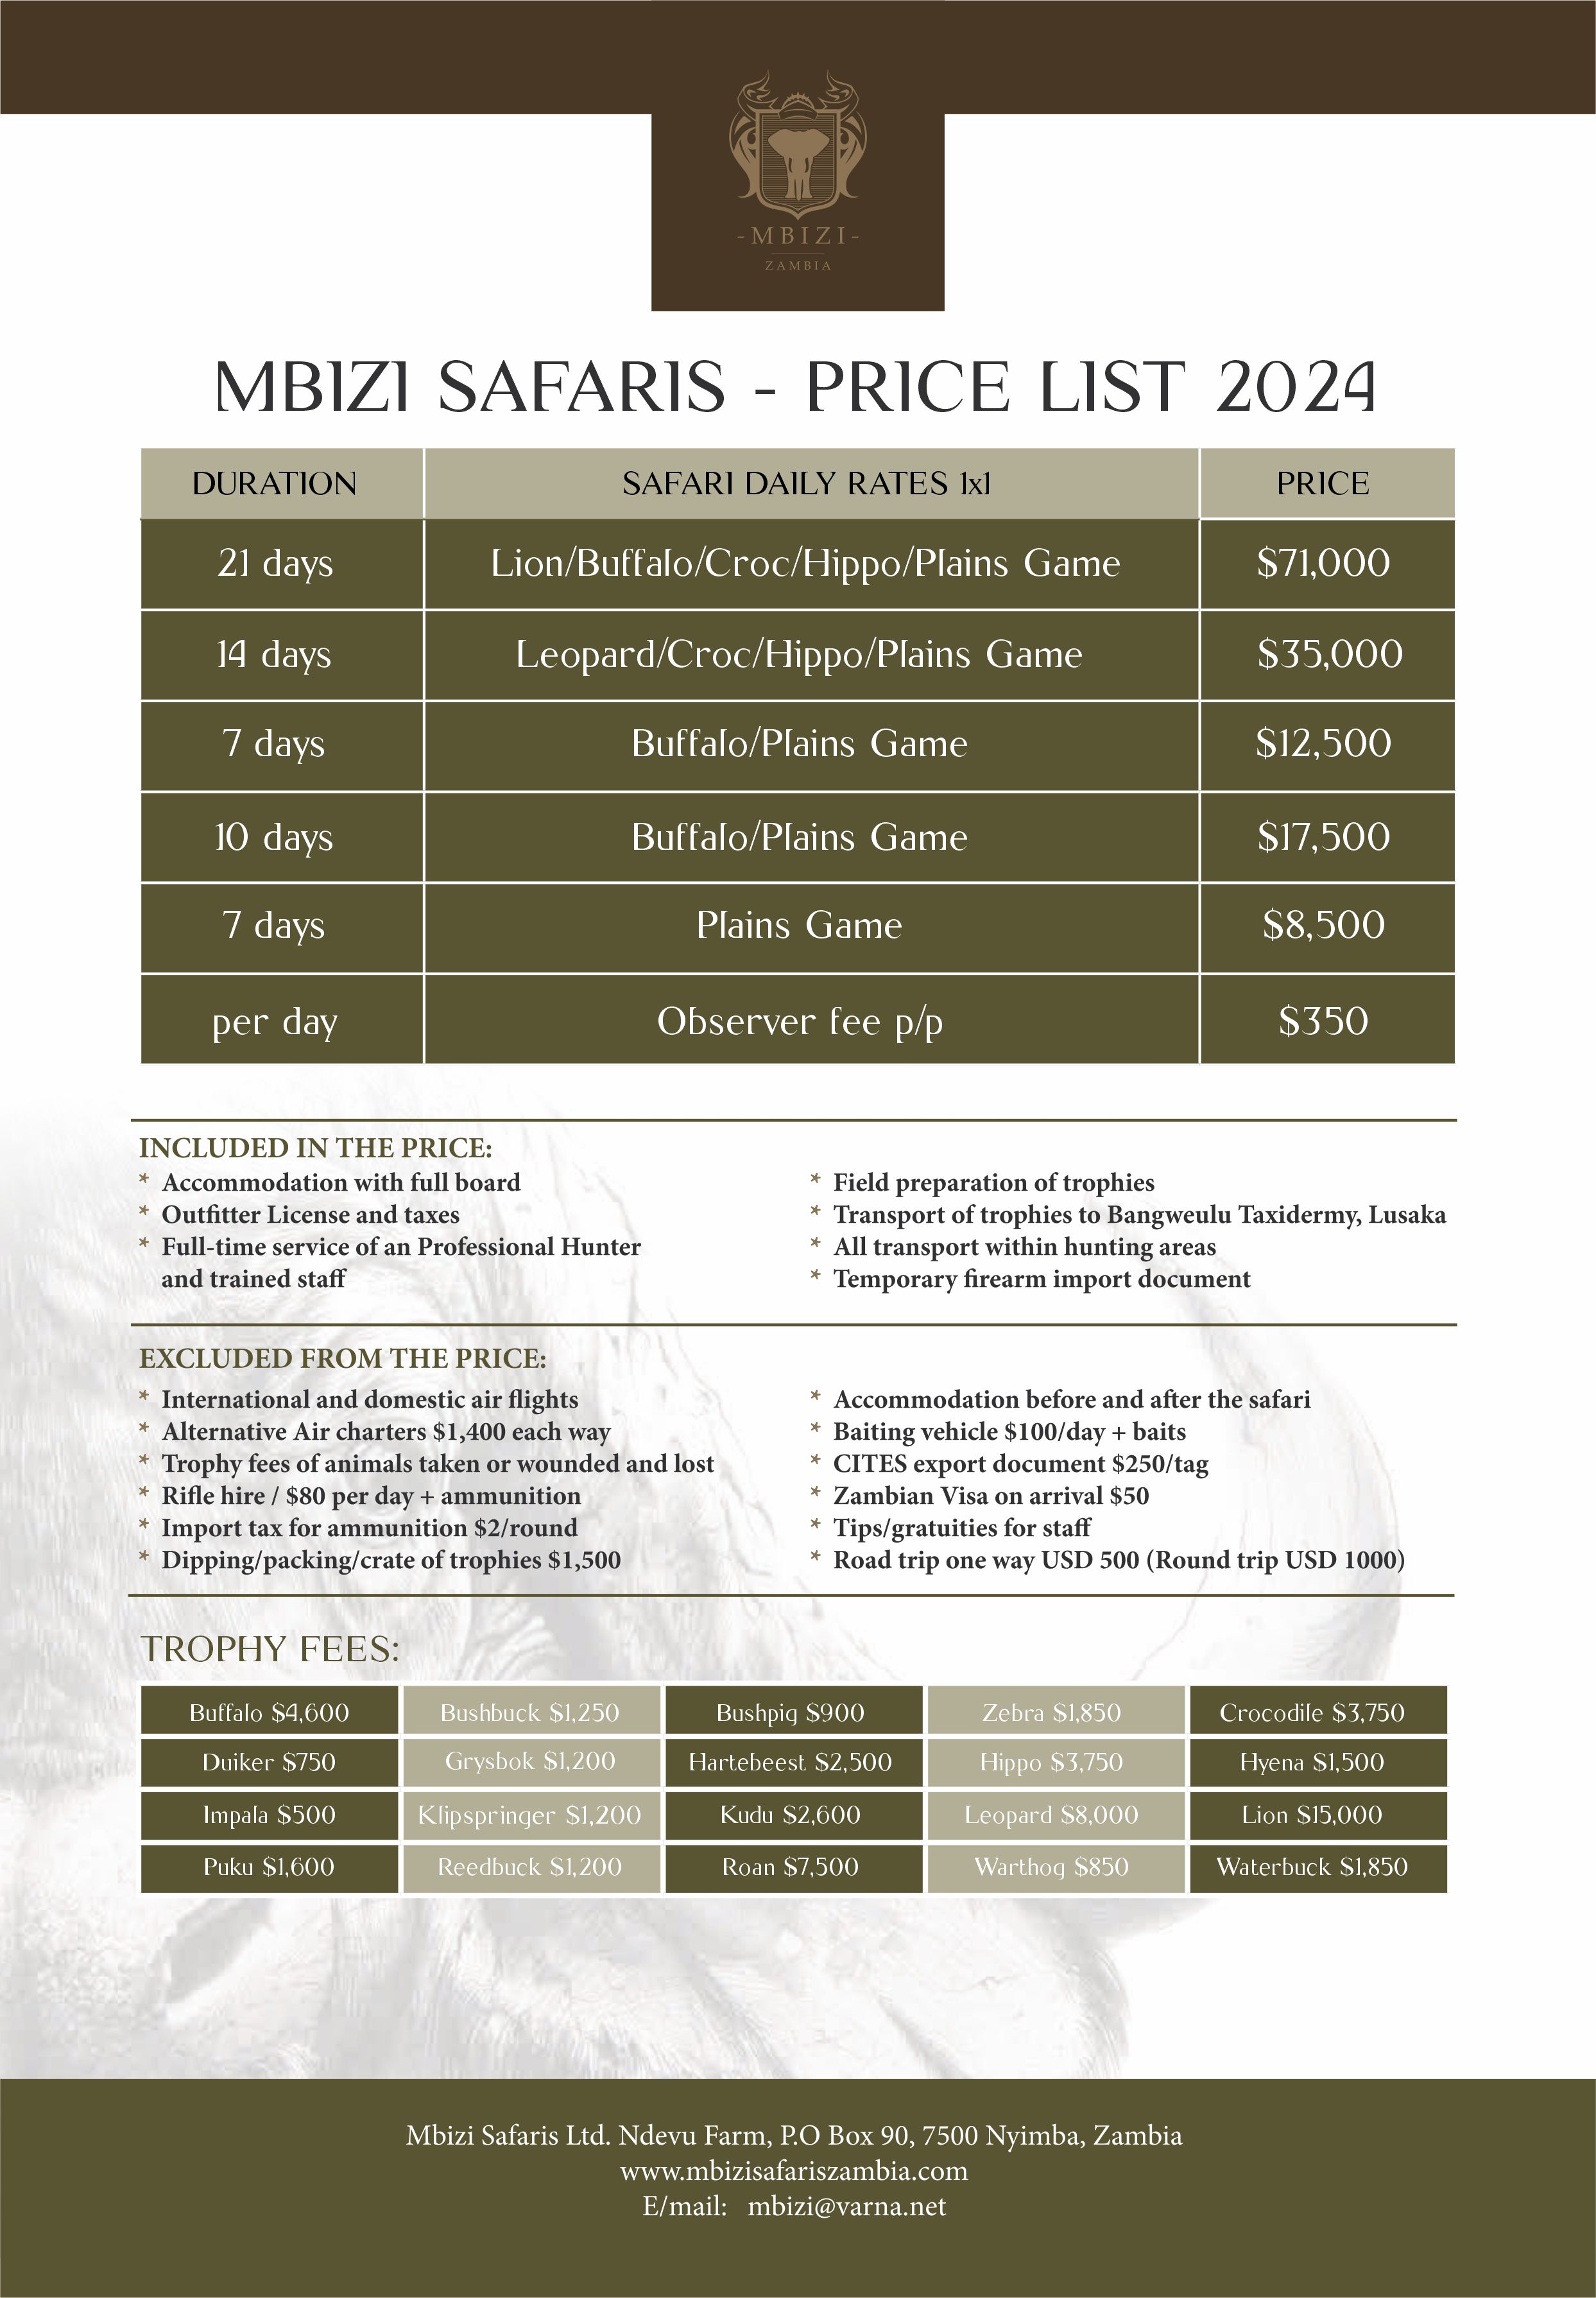 Mbizi Safari Price List 2024.jpg